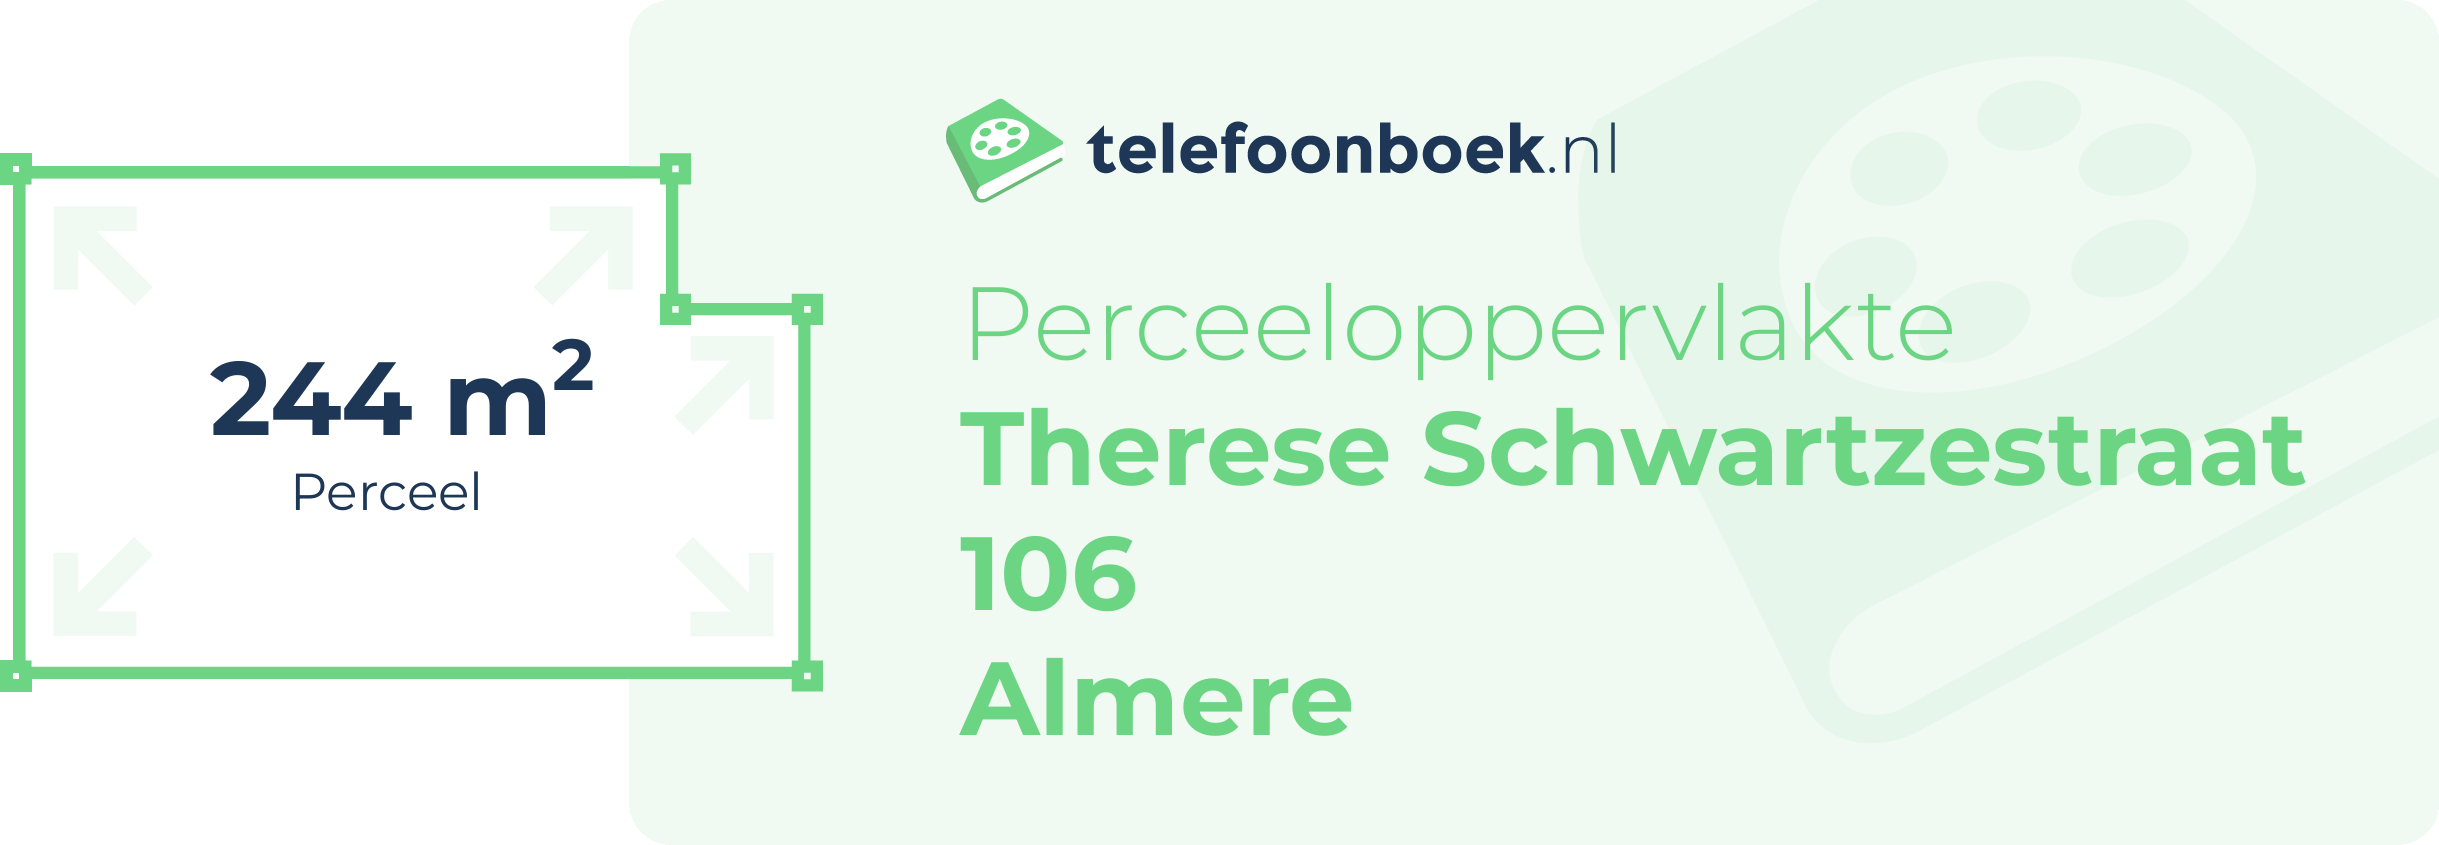 Perceeloppervlakte Therese Schwartzestraat 106 Almere